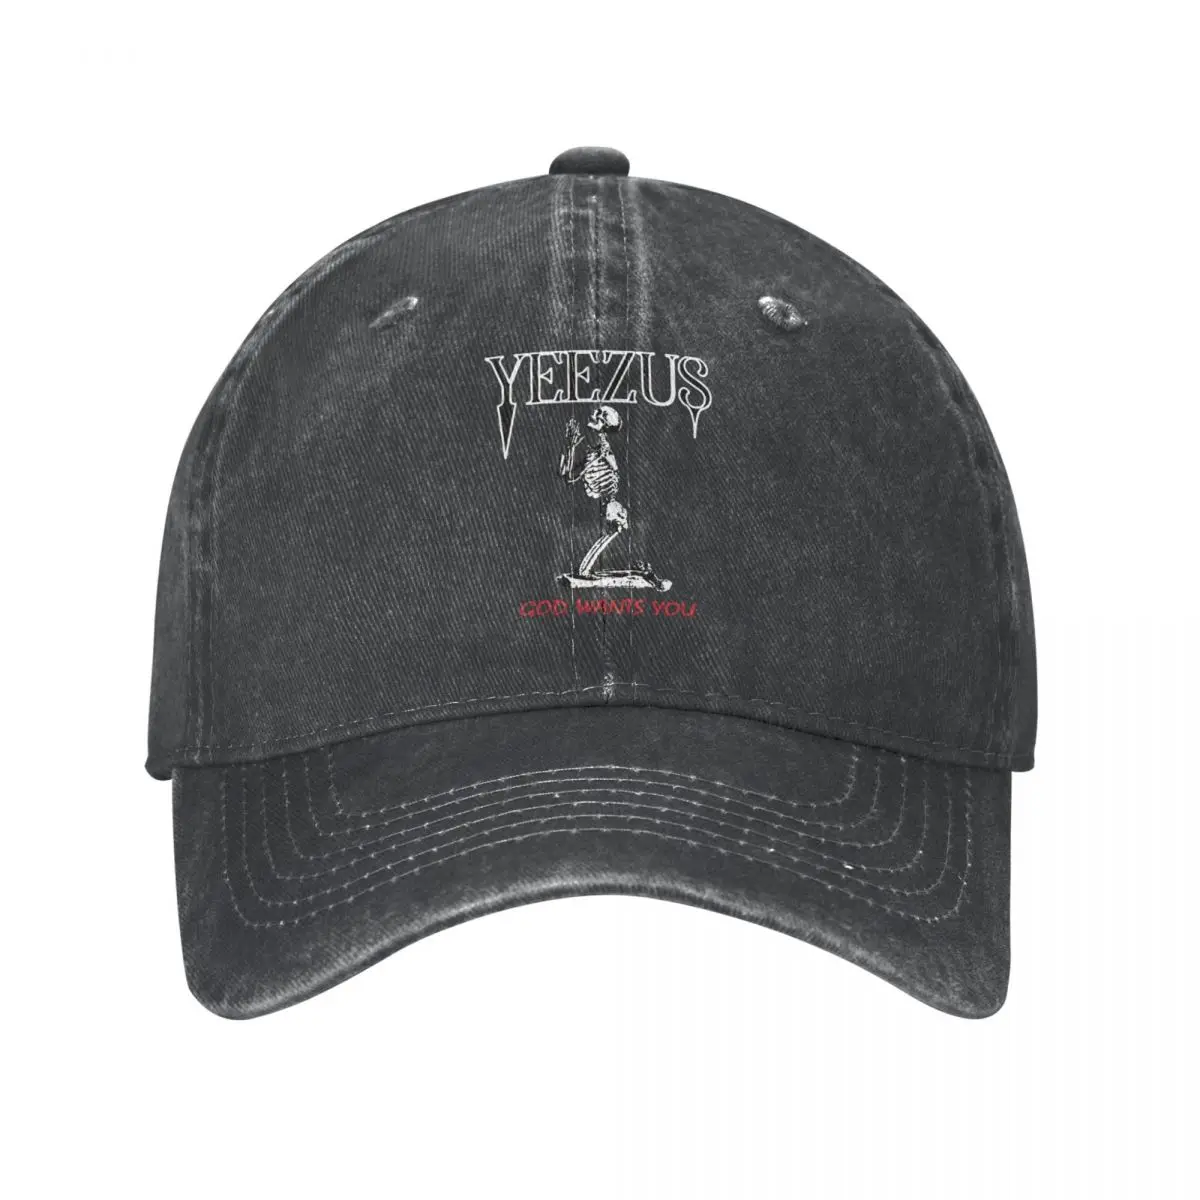 

Kanye West Yeezus Skeleton Baseball Cap Vintage Distressed Denim Snapback Hat Unisex Outdoor Workouts Gift Hats Cap